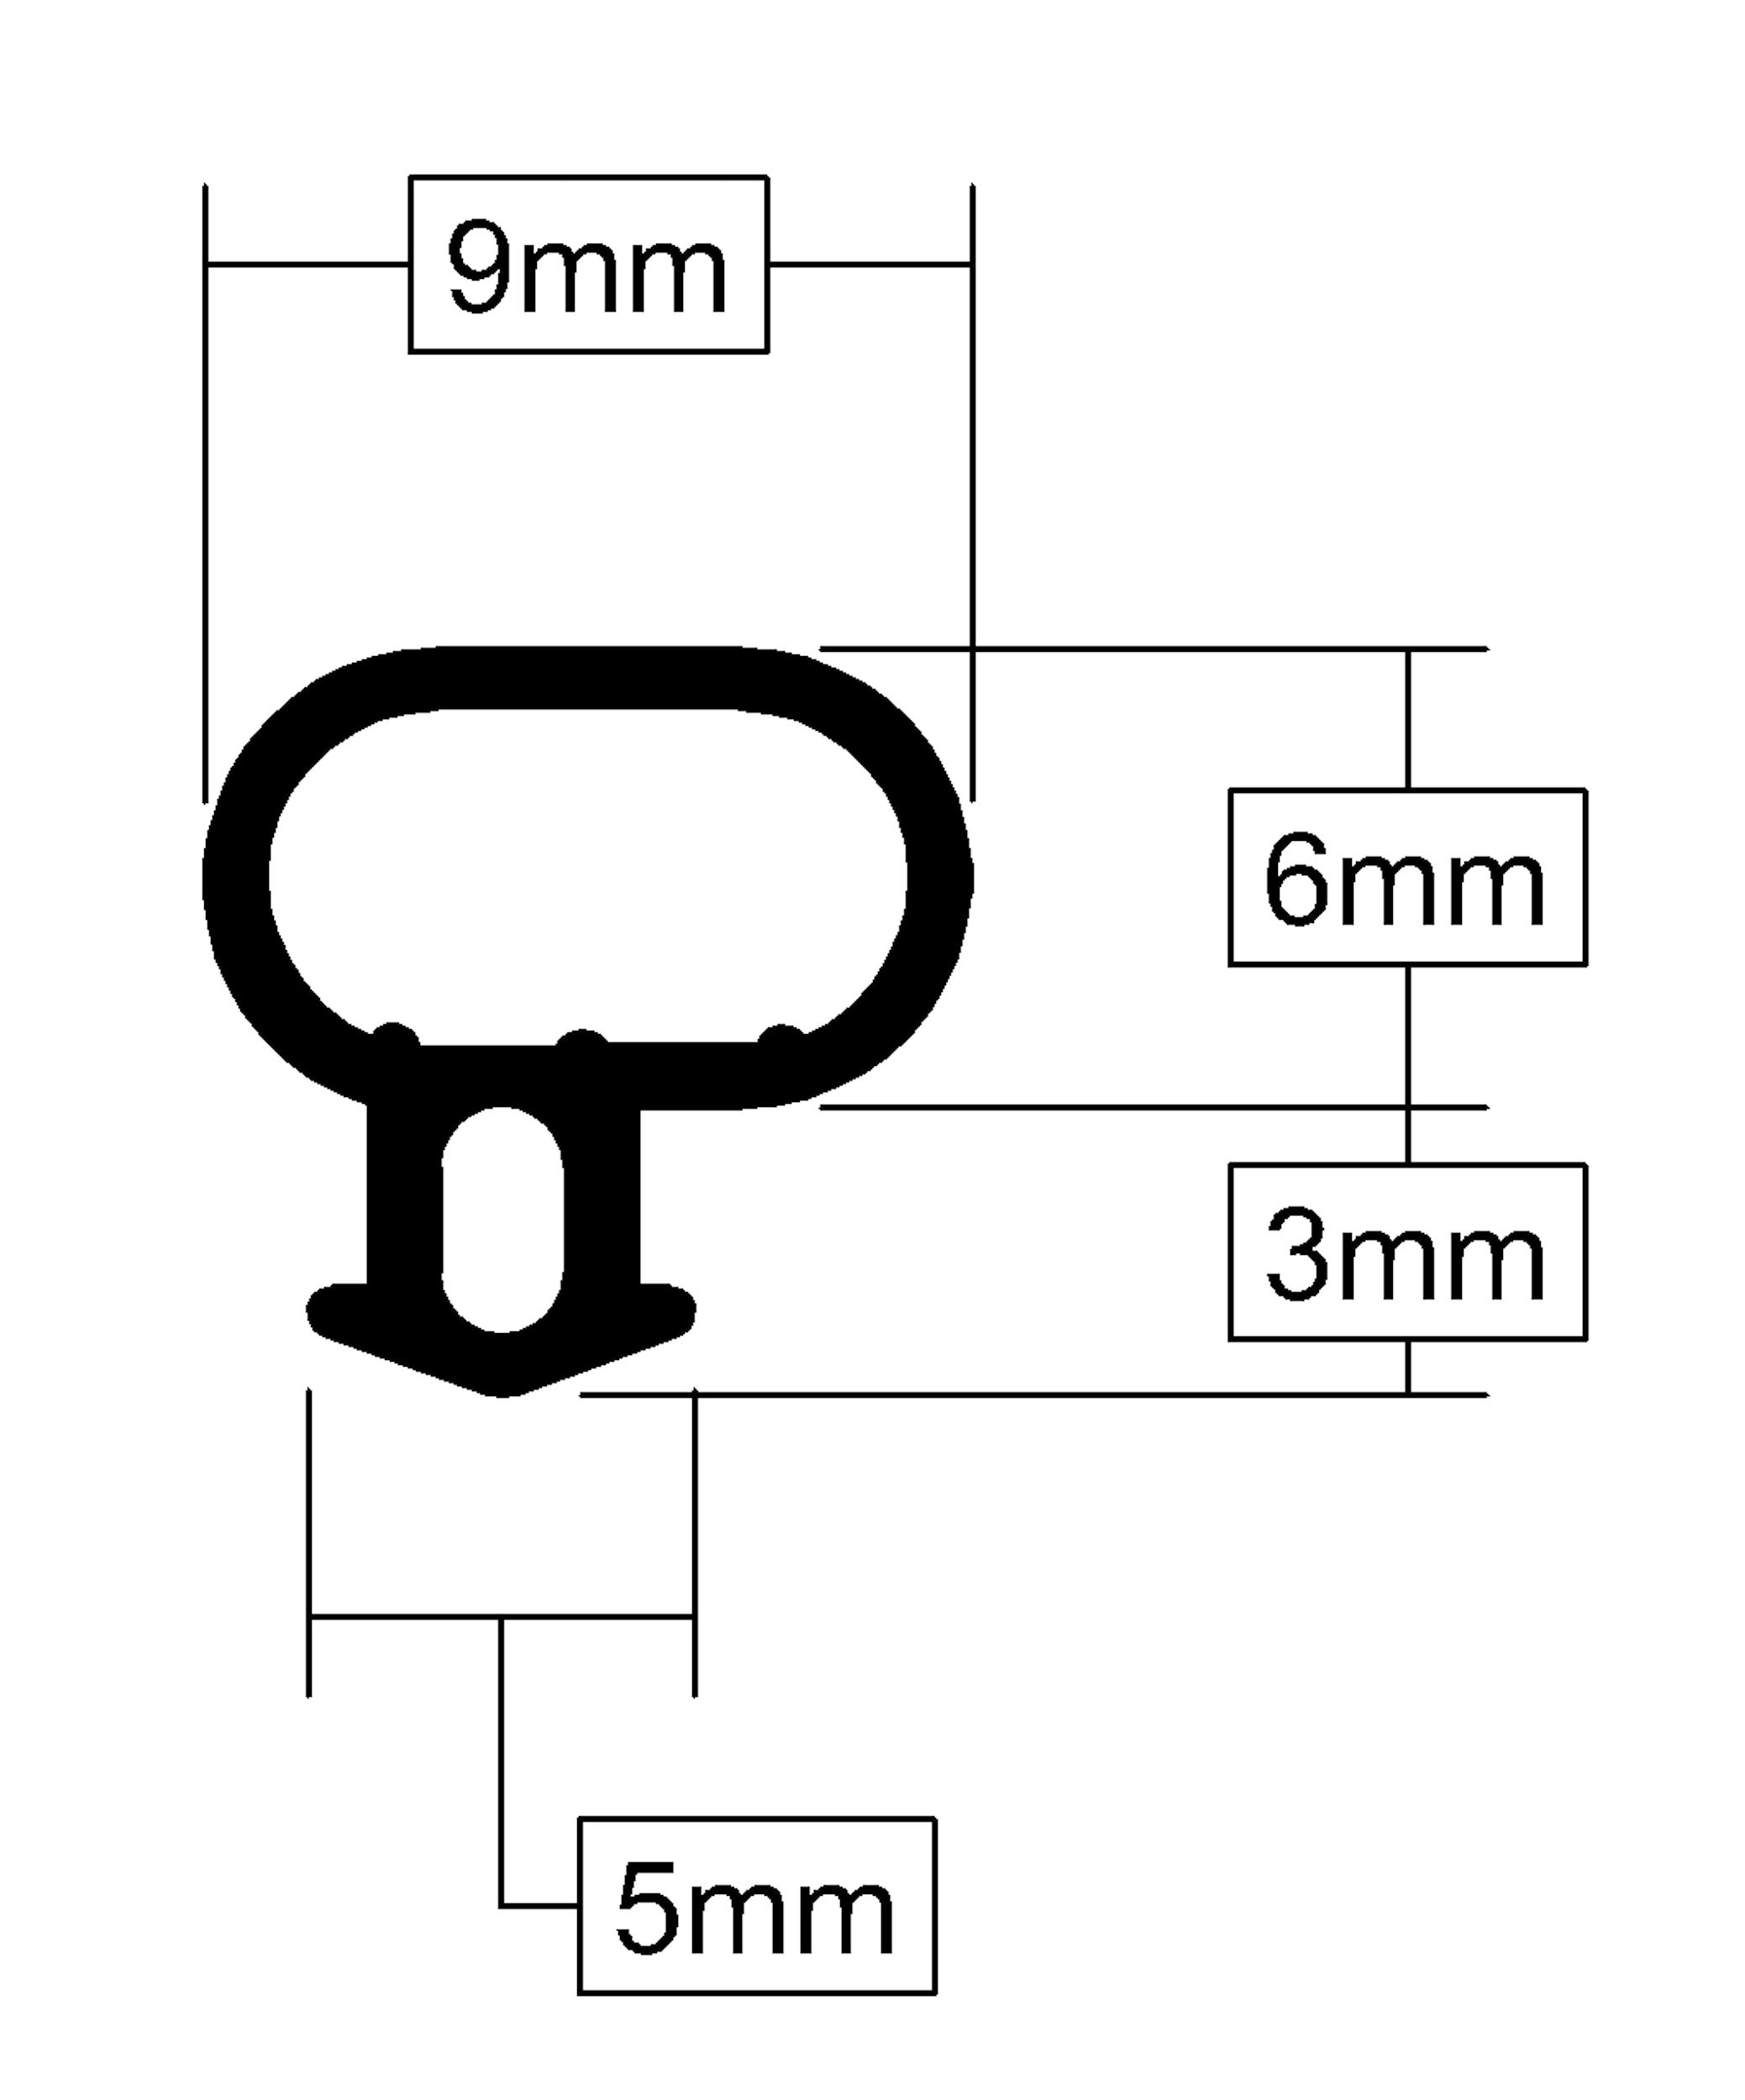 Carousel navigation image position 2 of 3